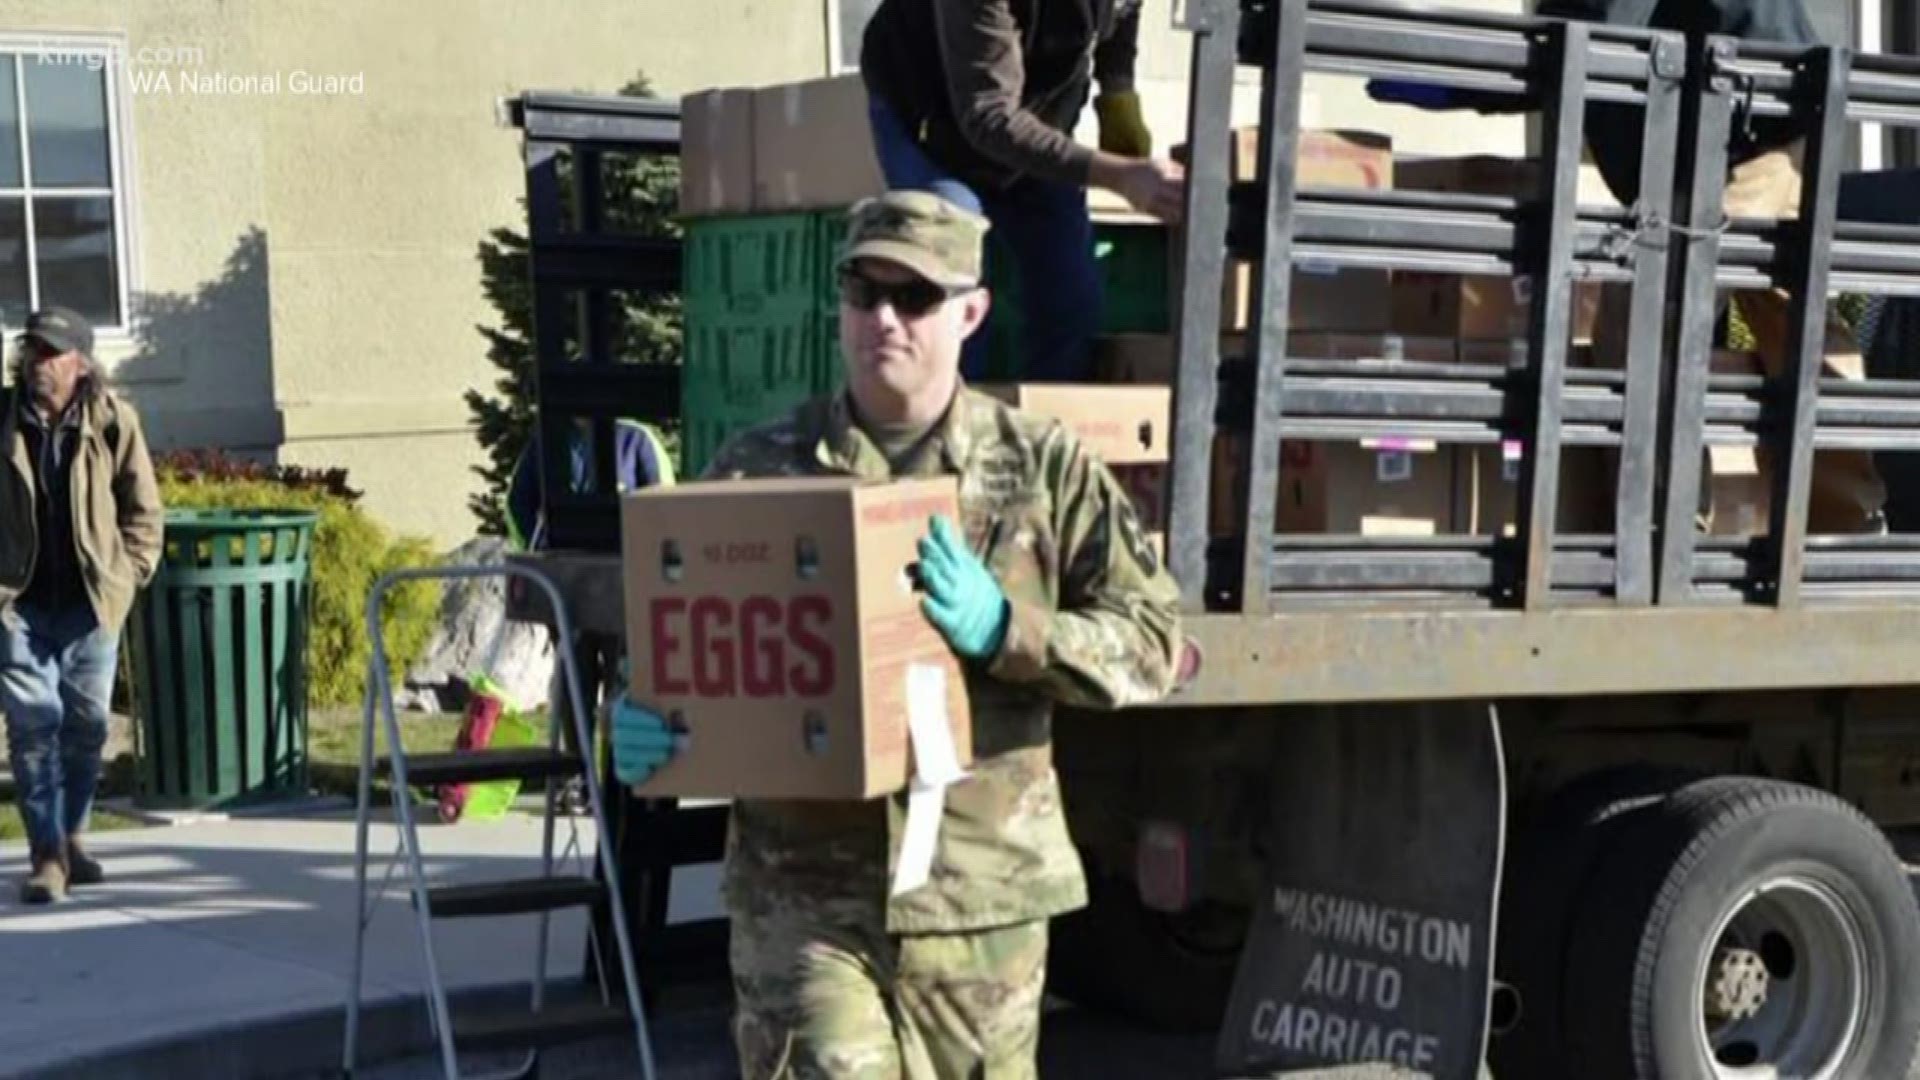 The Washington National Guard will be assisting staff at food banks in western Washington.